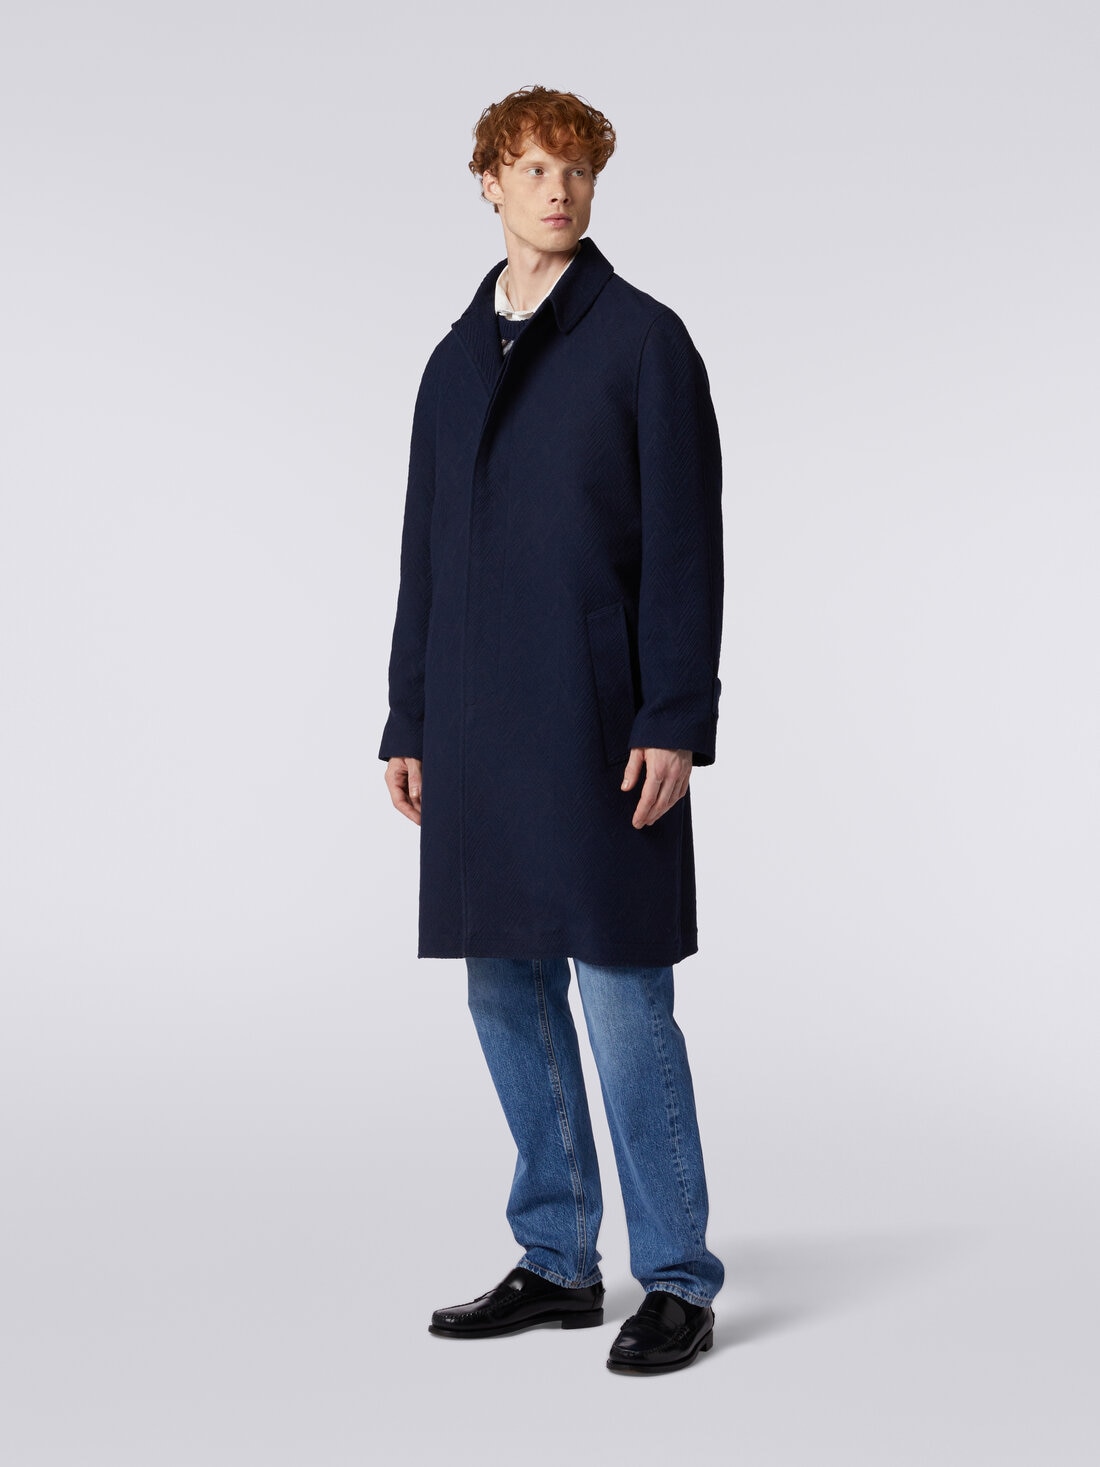 Jacquard wool blend coat with zigzag pattern, Dark Blue - US24SC07BW00R493924 - 2